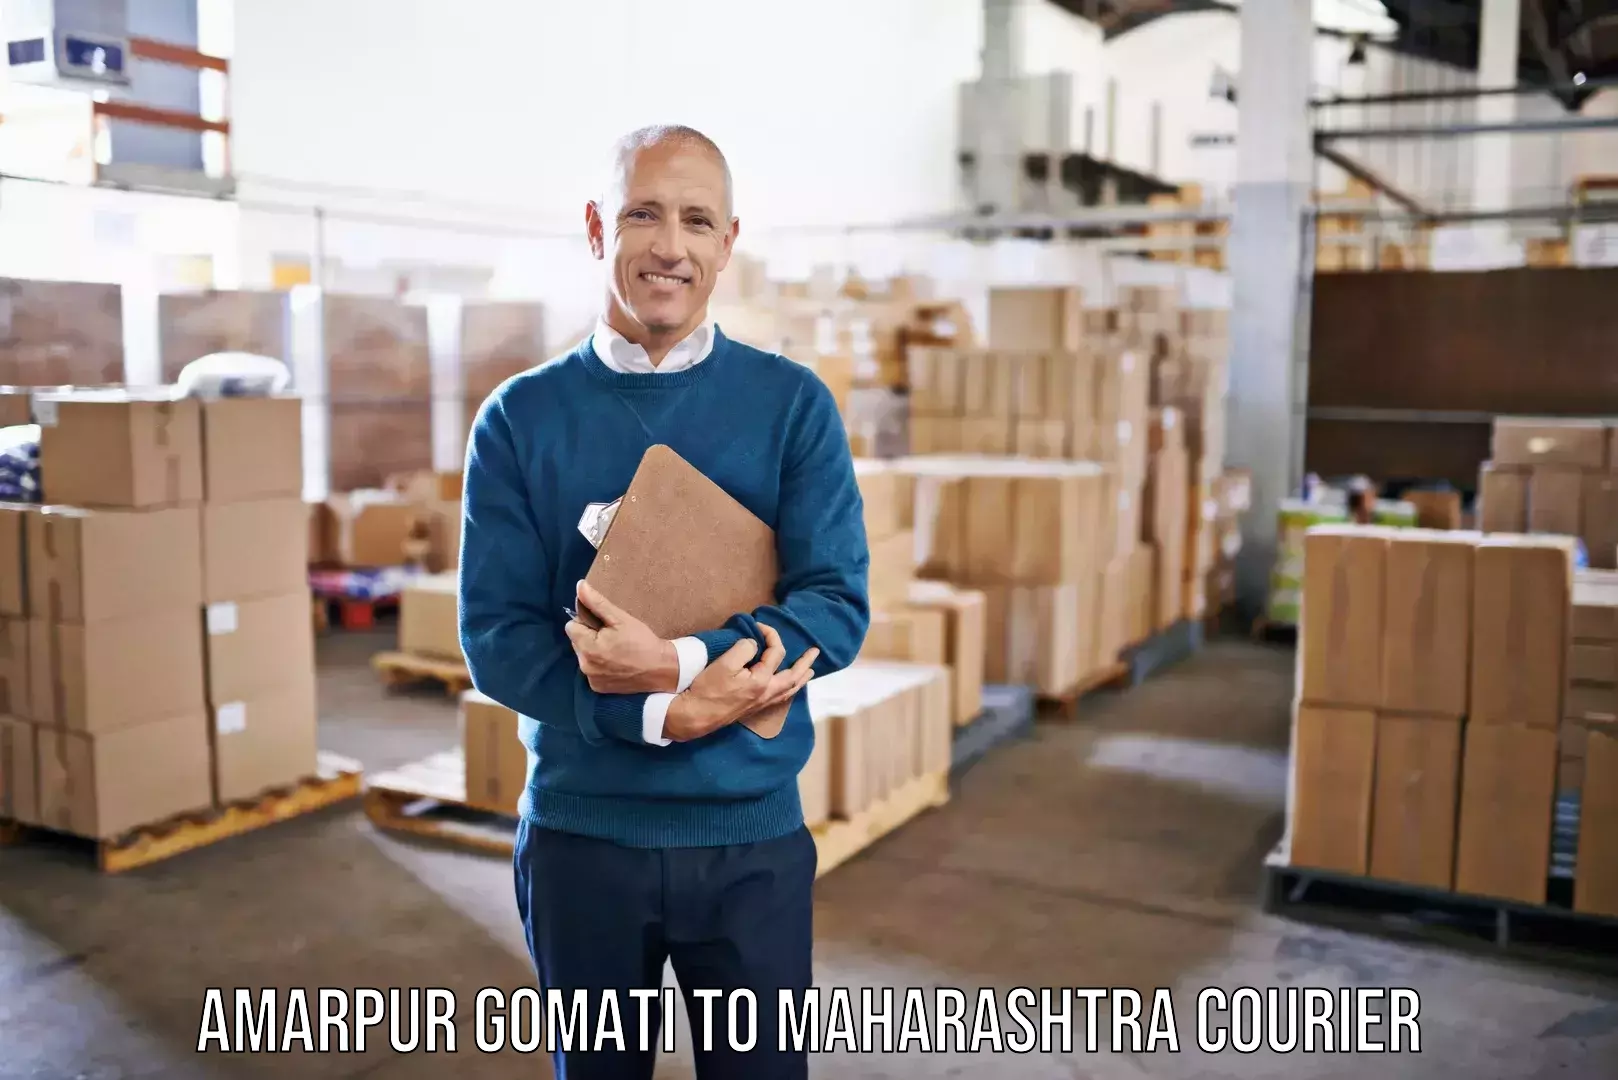 Professional furniture movers Amarpur Gomati to Ganpatipule